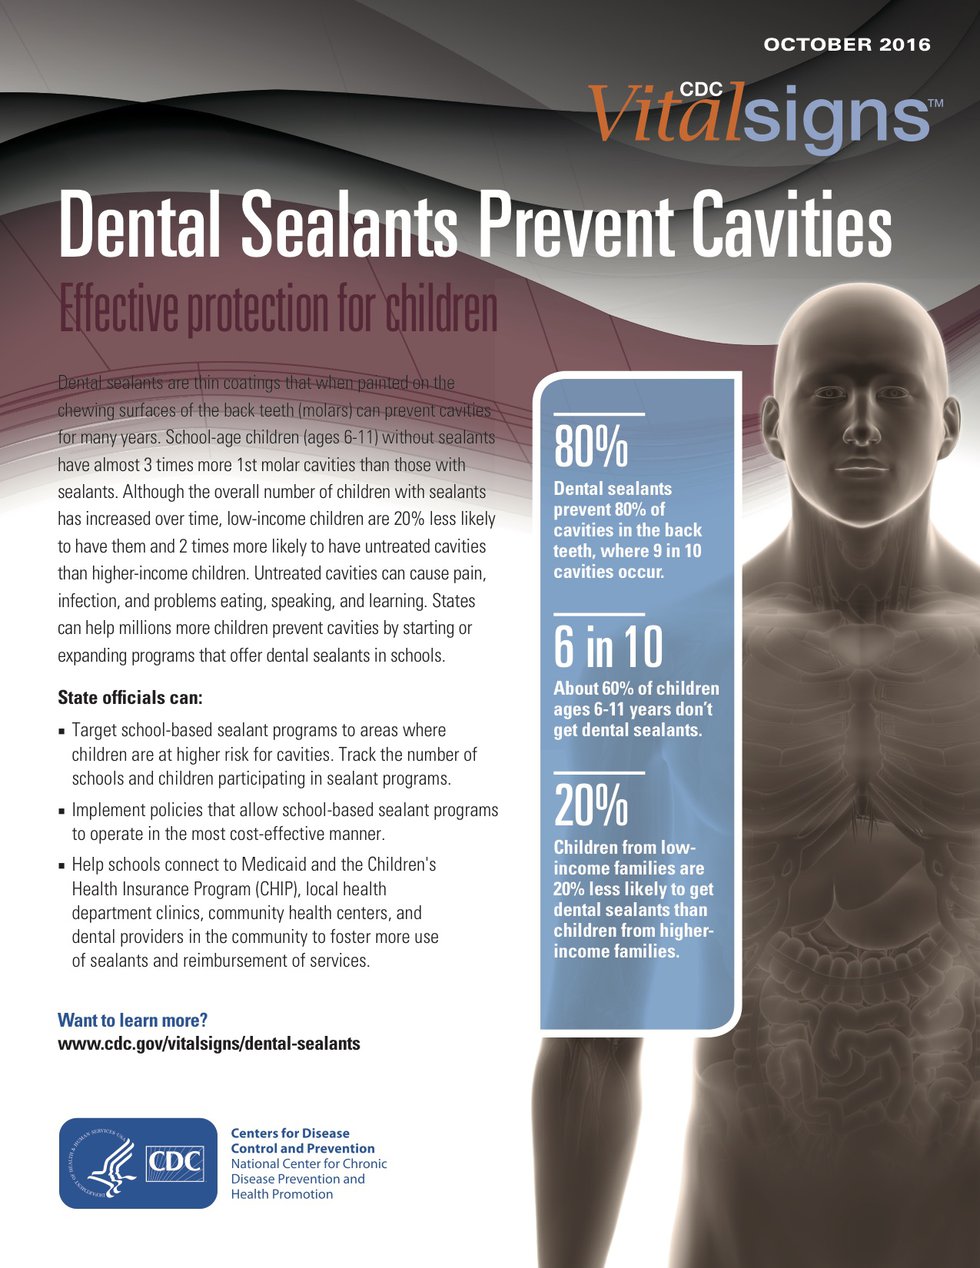 CDC Dental Sealants infographic